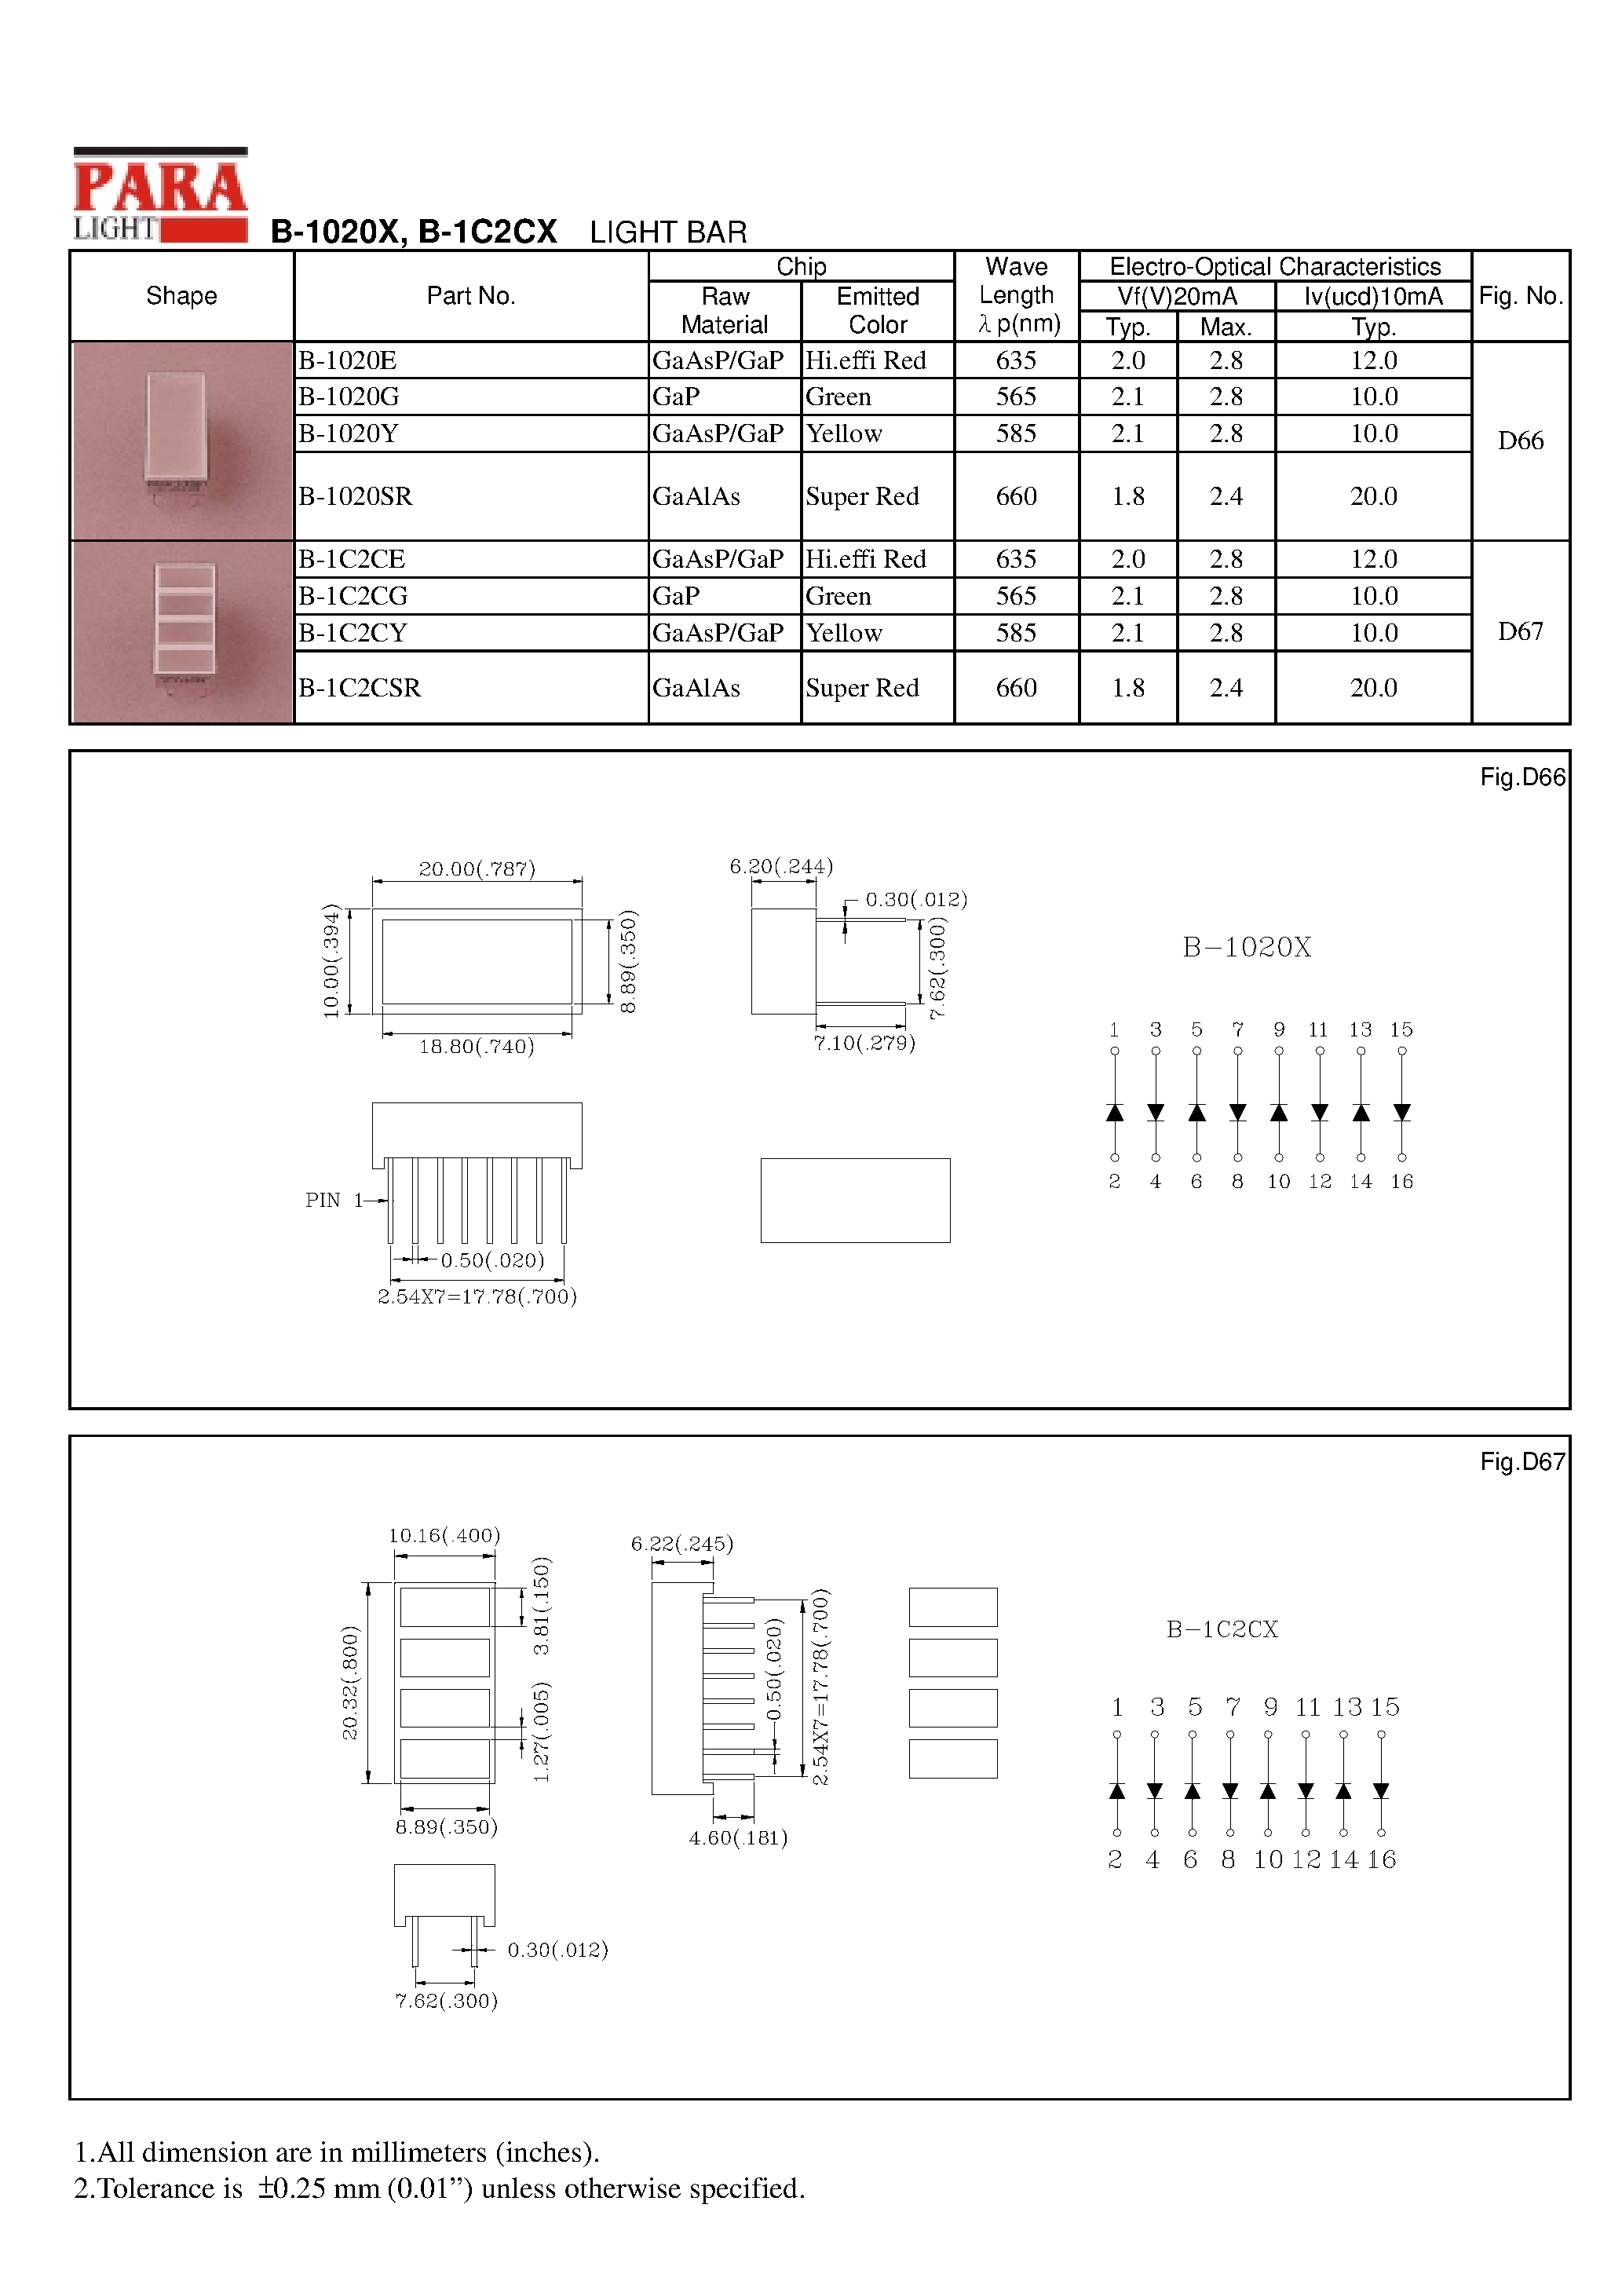 Datasheet B-1C2CX - LIGHT BAR page 1